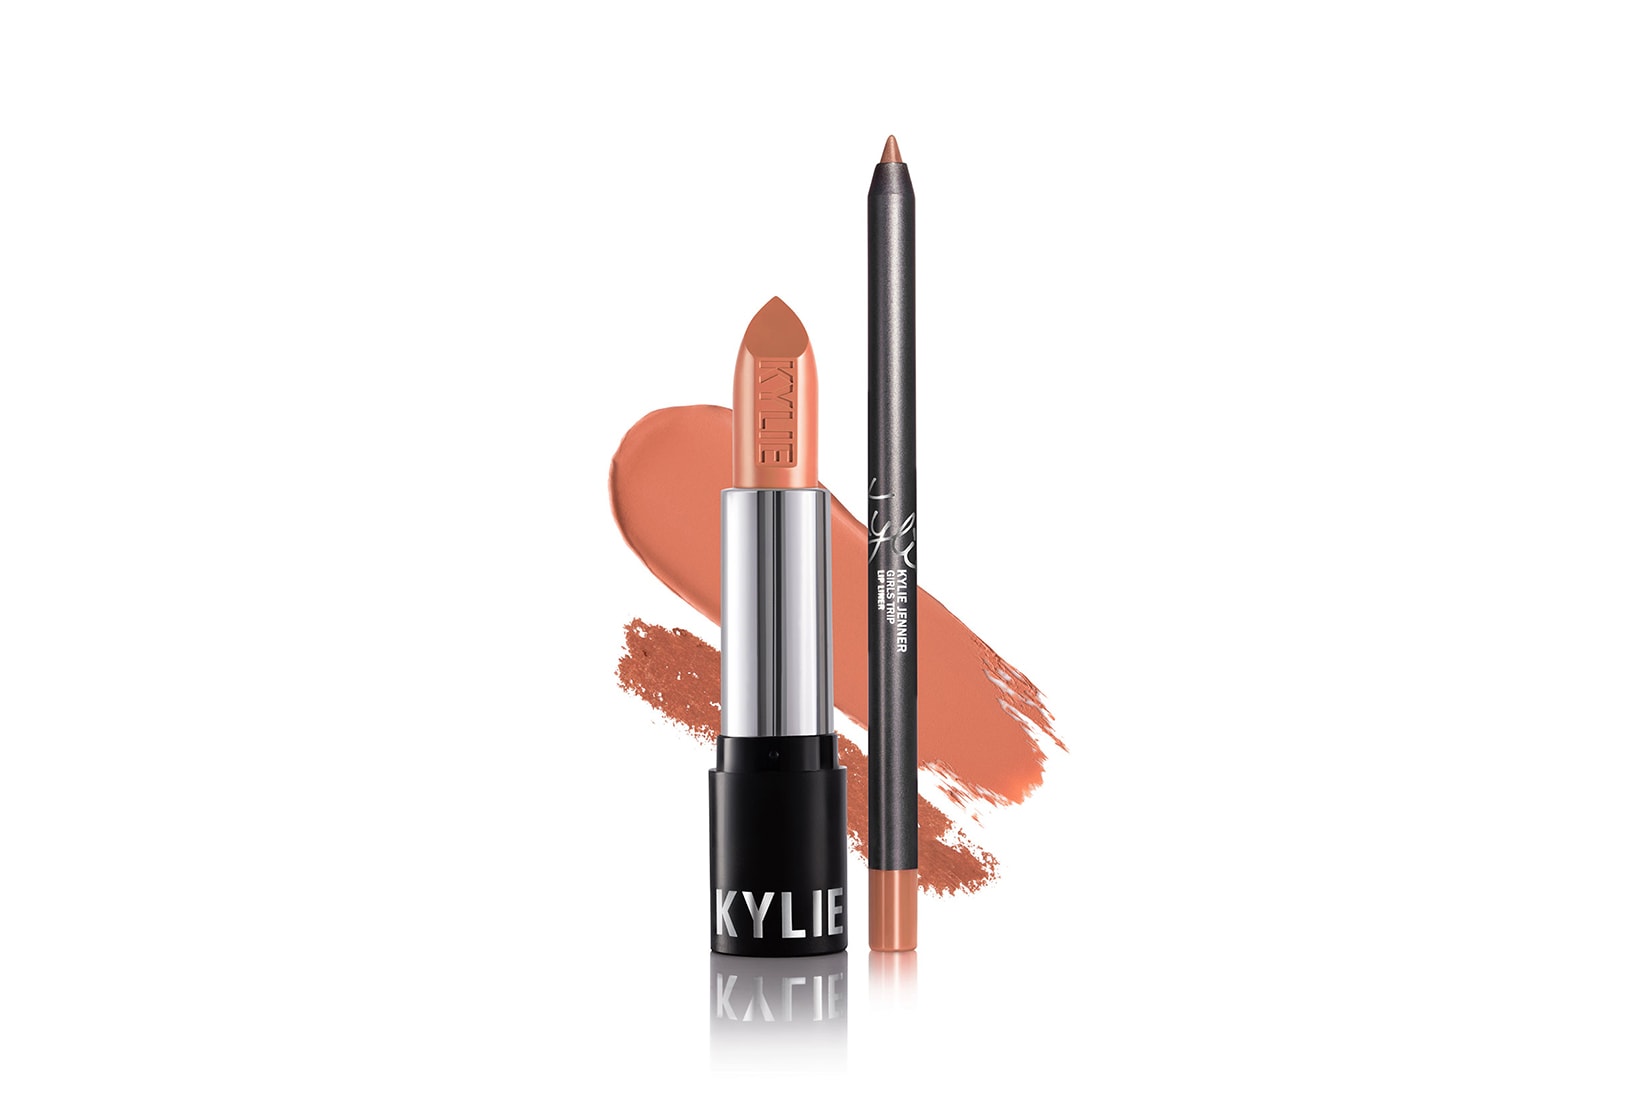 kylie jenner cosmetics matte lipsticks lip liner kits makeup